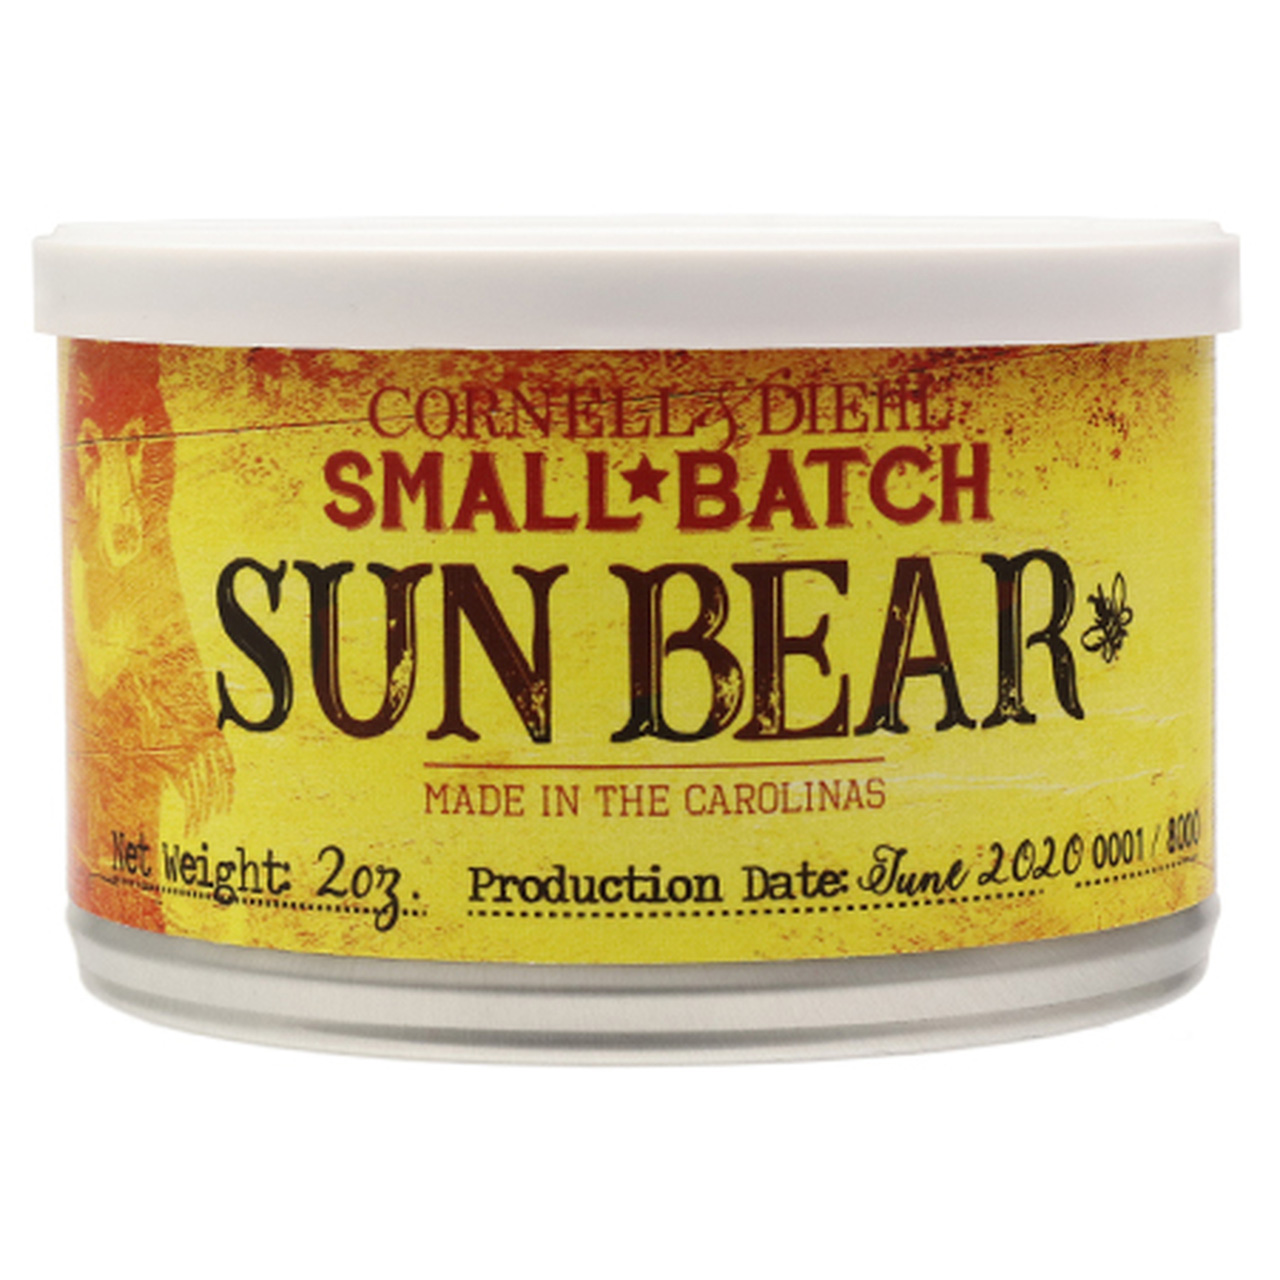 Табак CORNELL&DIEHL Sun Bear Small Batch *57g